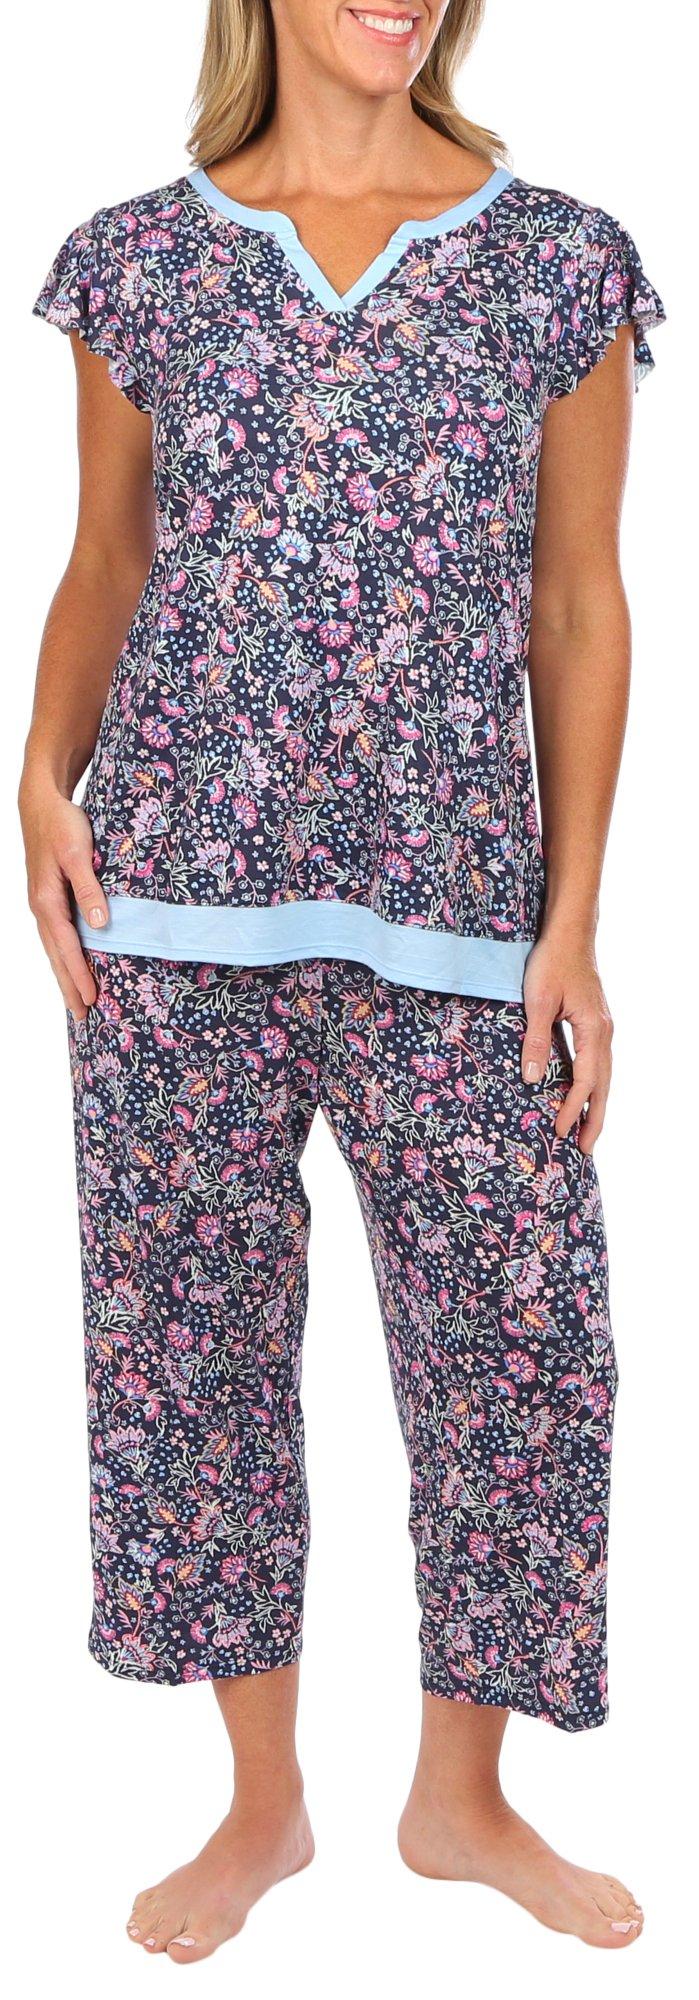 Ellen Tracy Womens 2-Pc. Floral Top & Pants Sleep Set